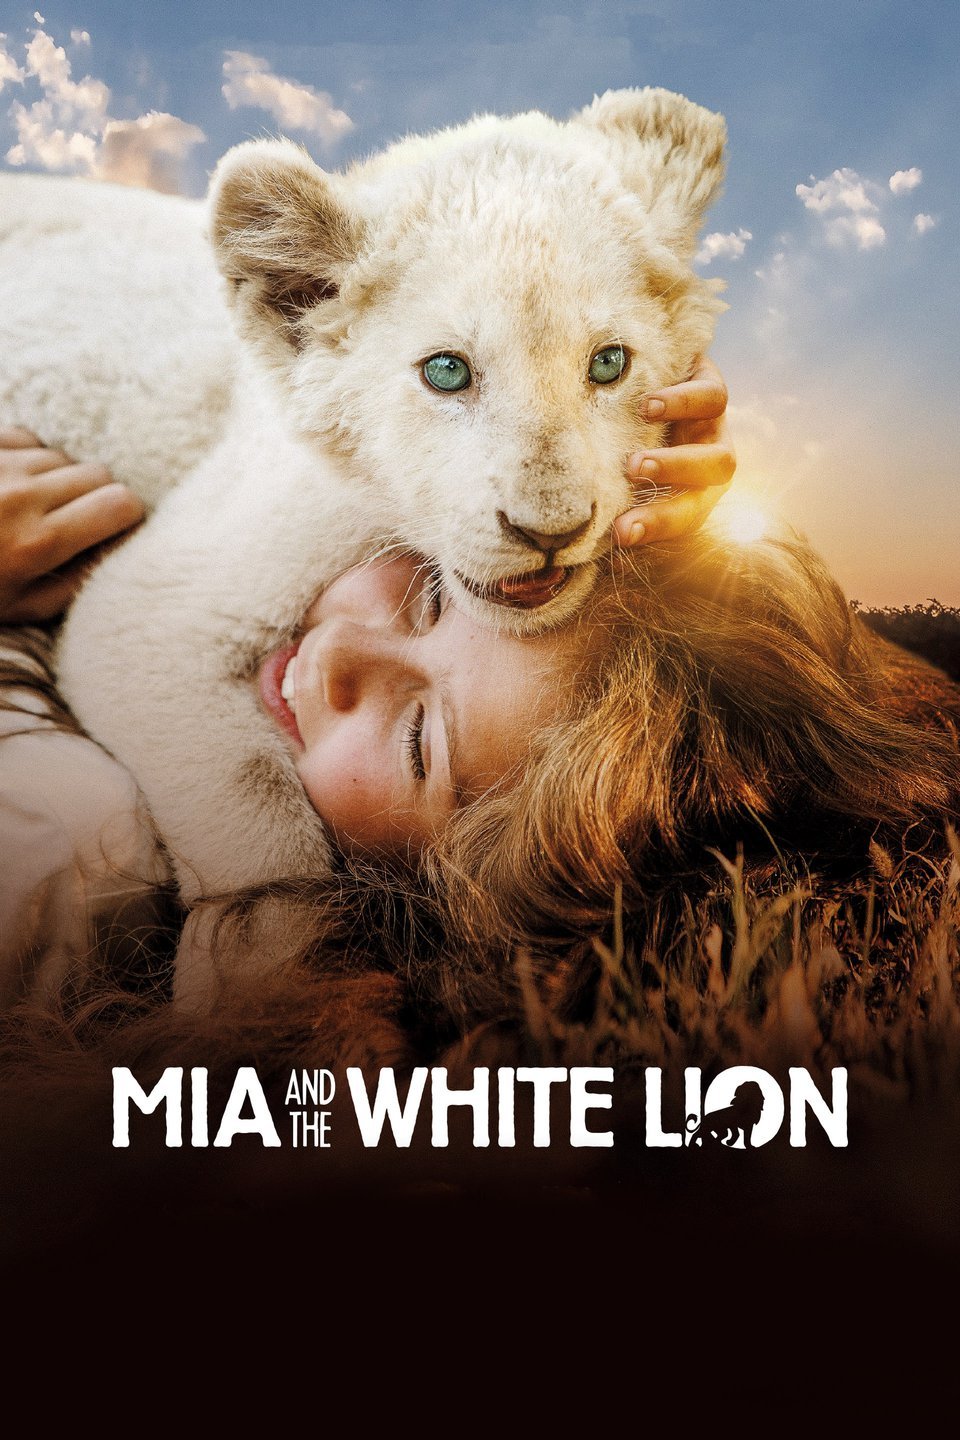 [MINI Super-HQ] Mia and the White Lion (2018) มีอากับมิตรภาพมหัศจรรย์ [1080p] [พากย์ไทย 5.1 + เสียงอังกฤษ DTS] [บรรยายไทย + อังกฤษ] [เสียงไทย + ซับไทย] [ONE2UP]